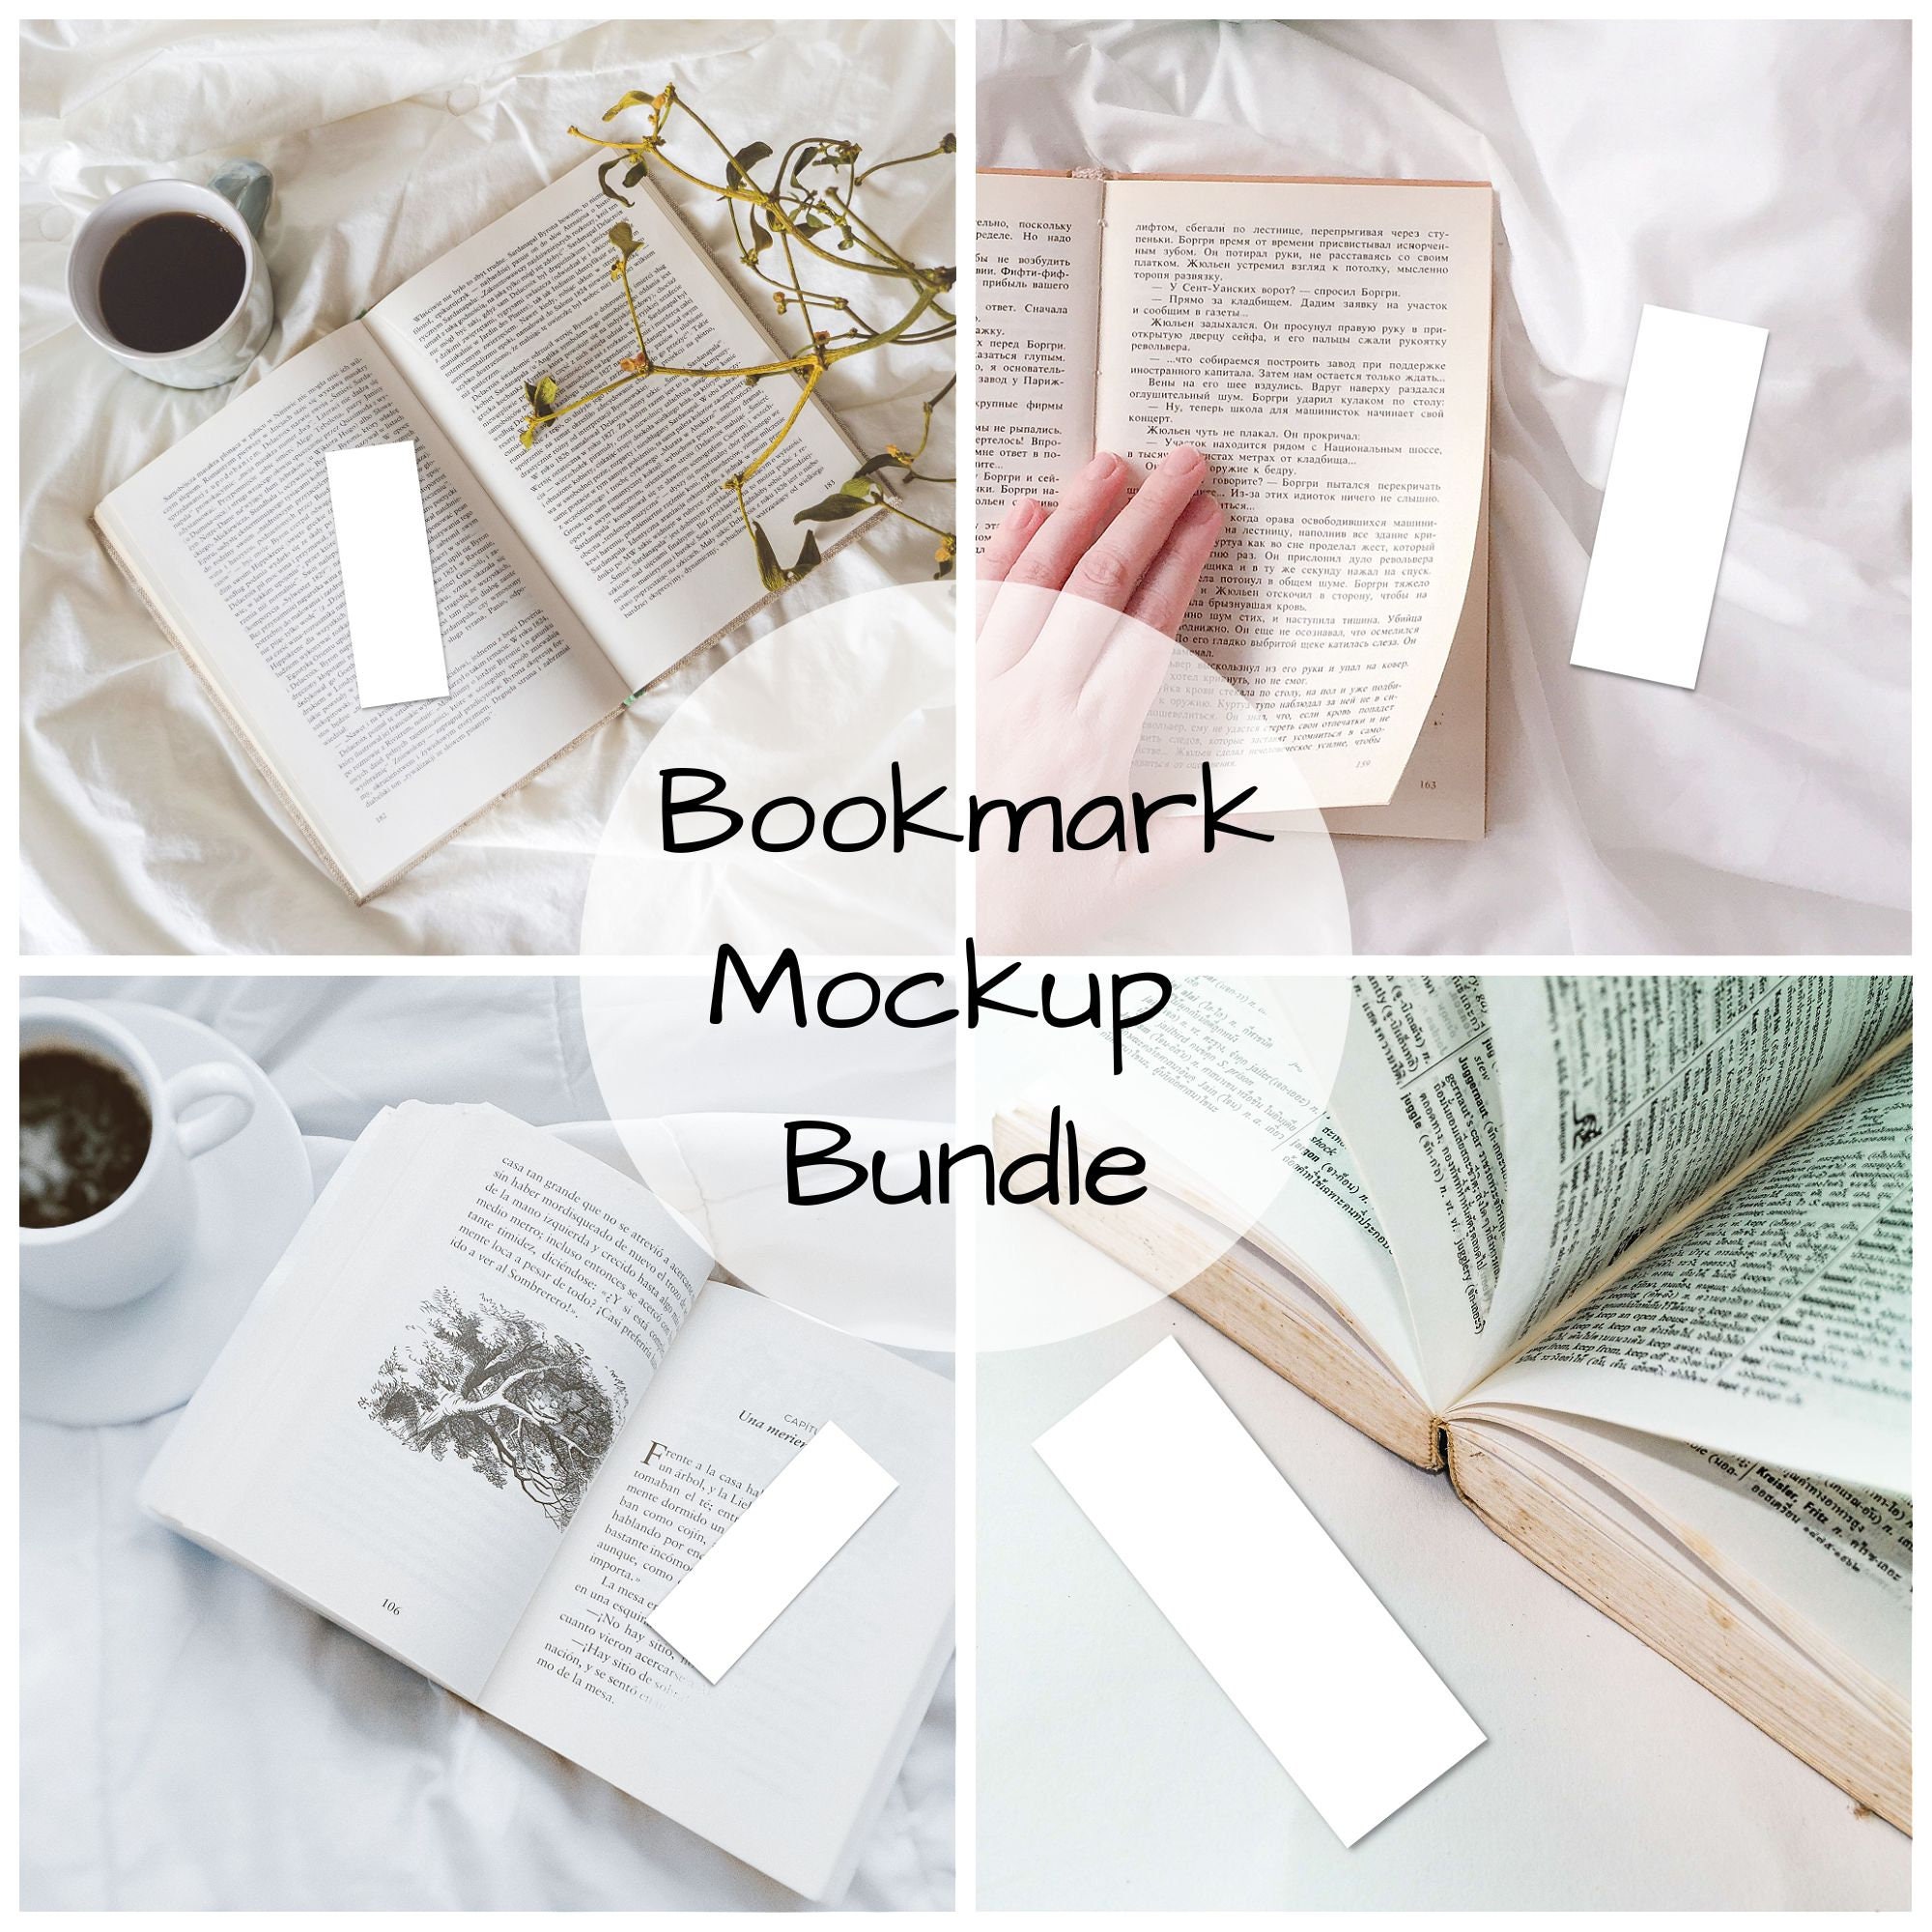 Acrylic Bookmark Blanks – The Heirloom Store